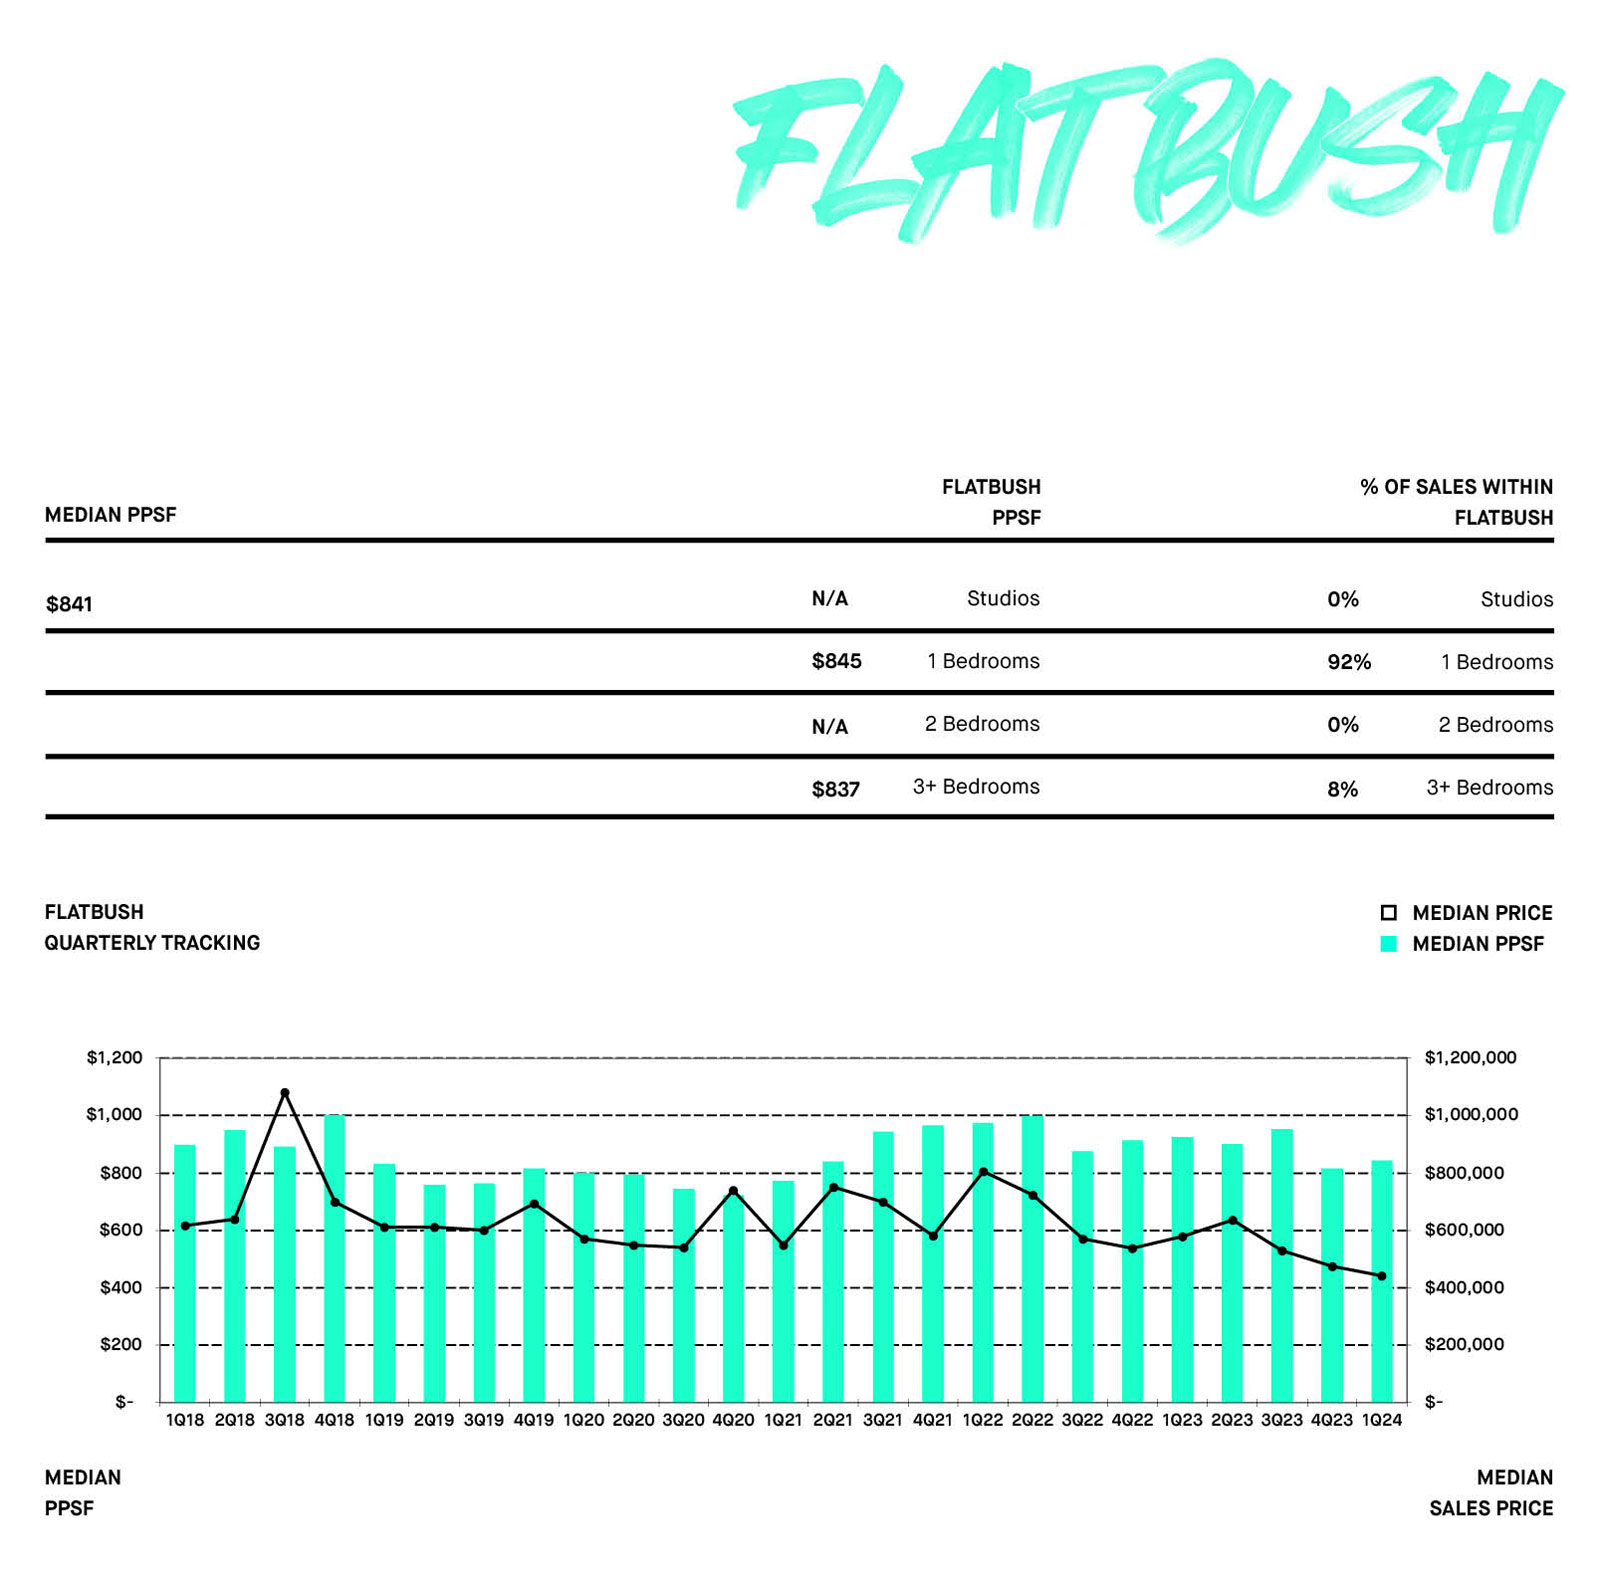 Flatbush